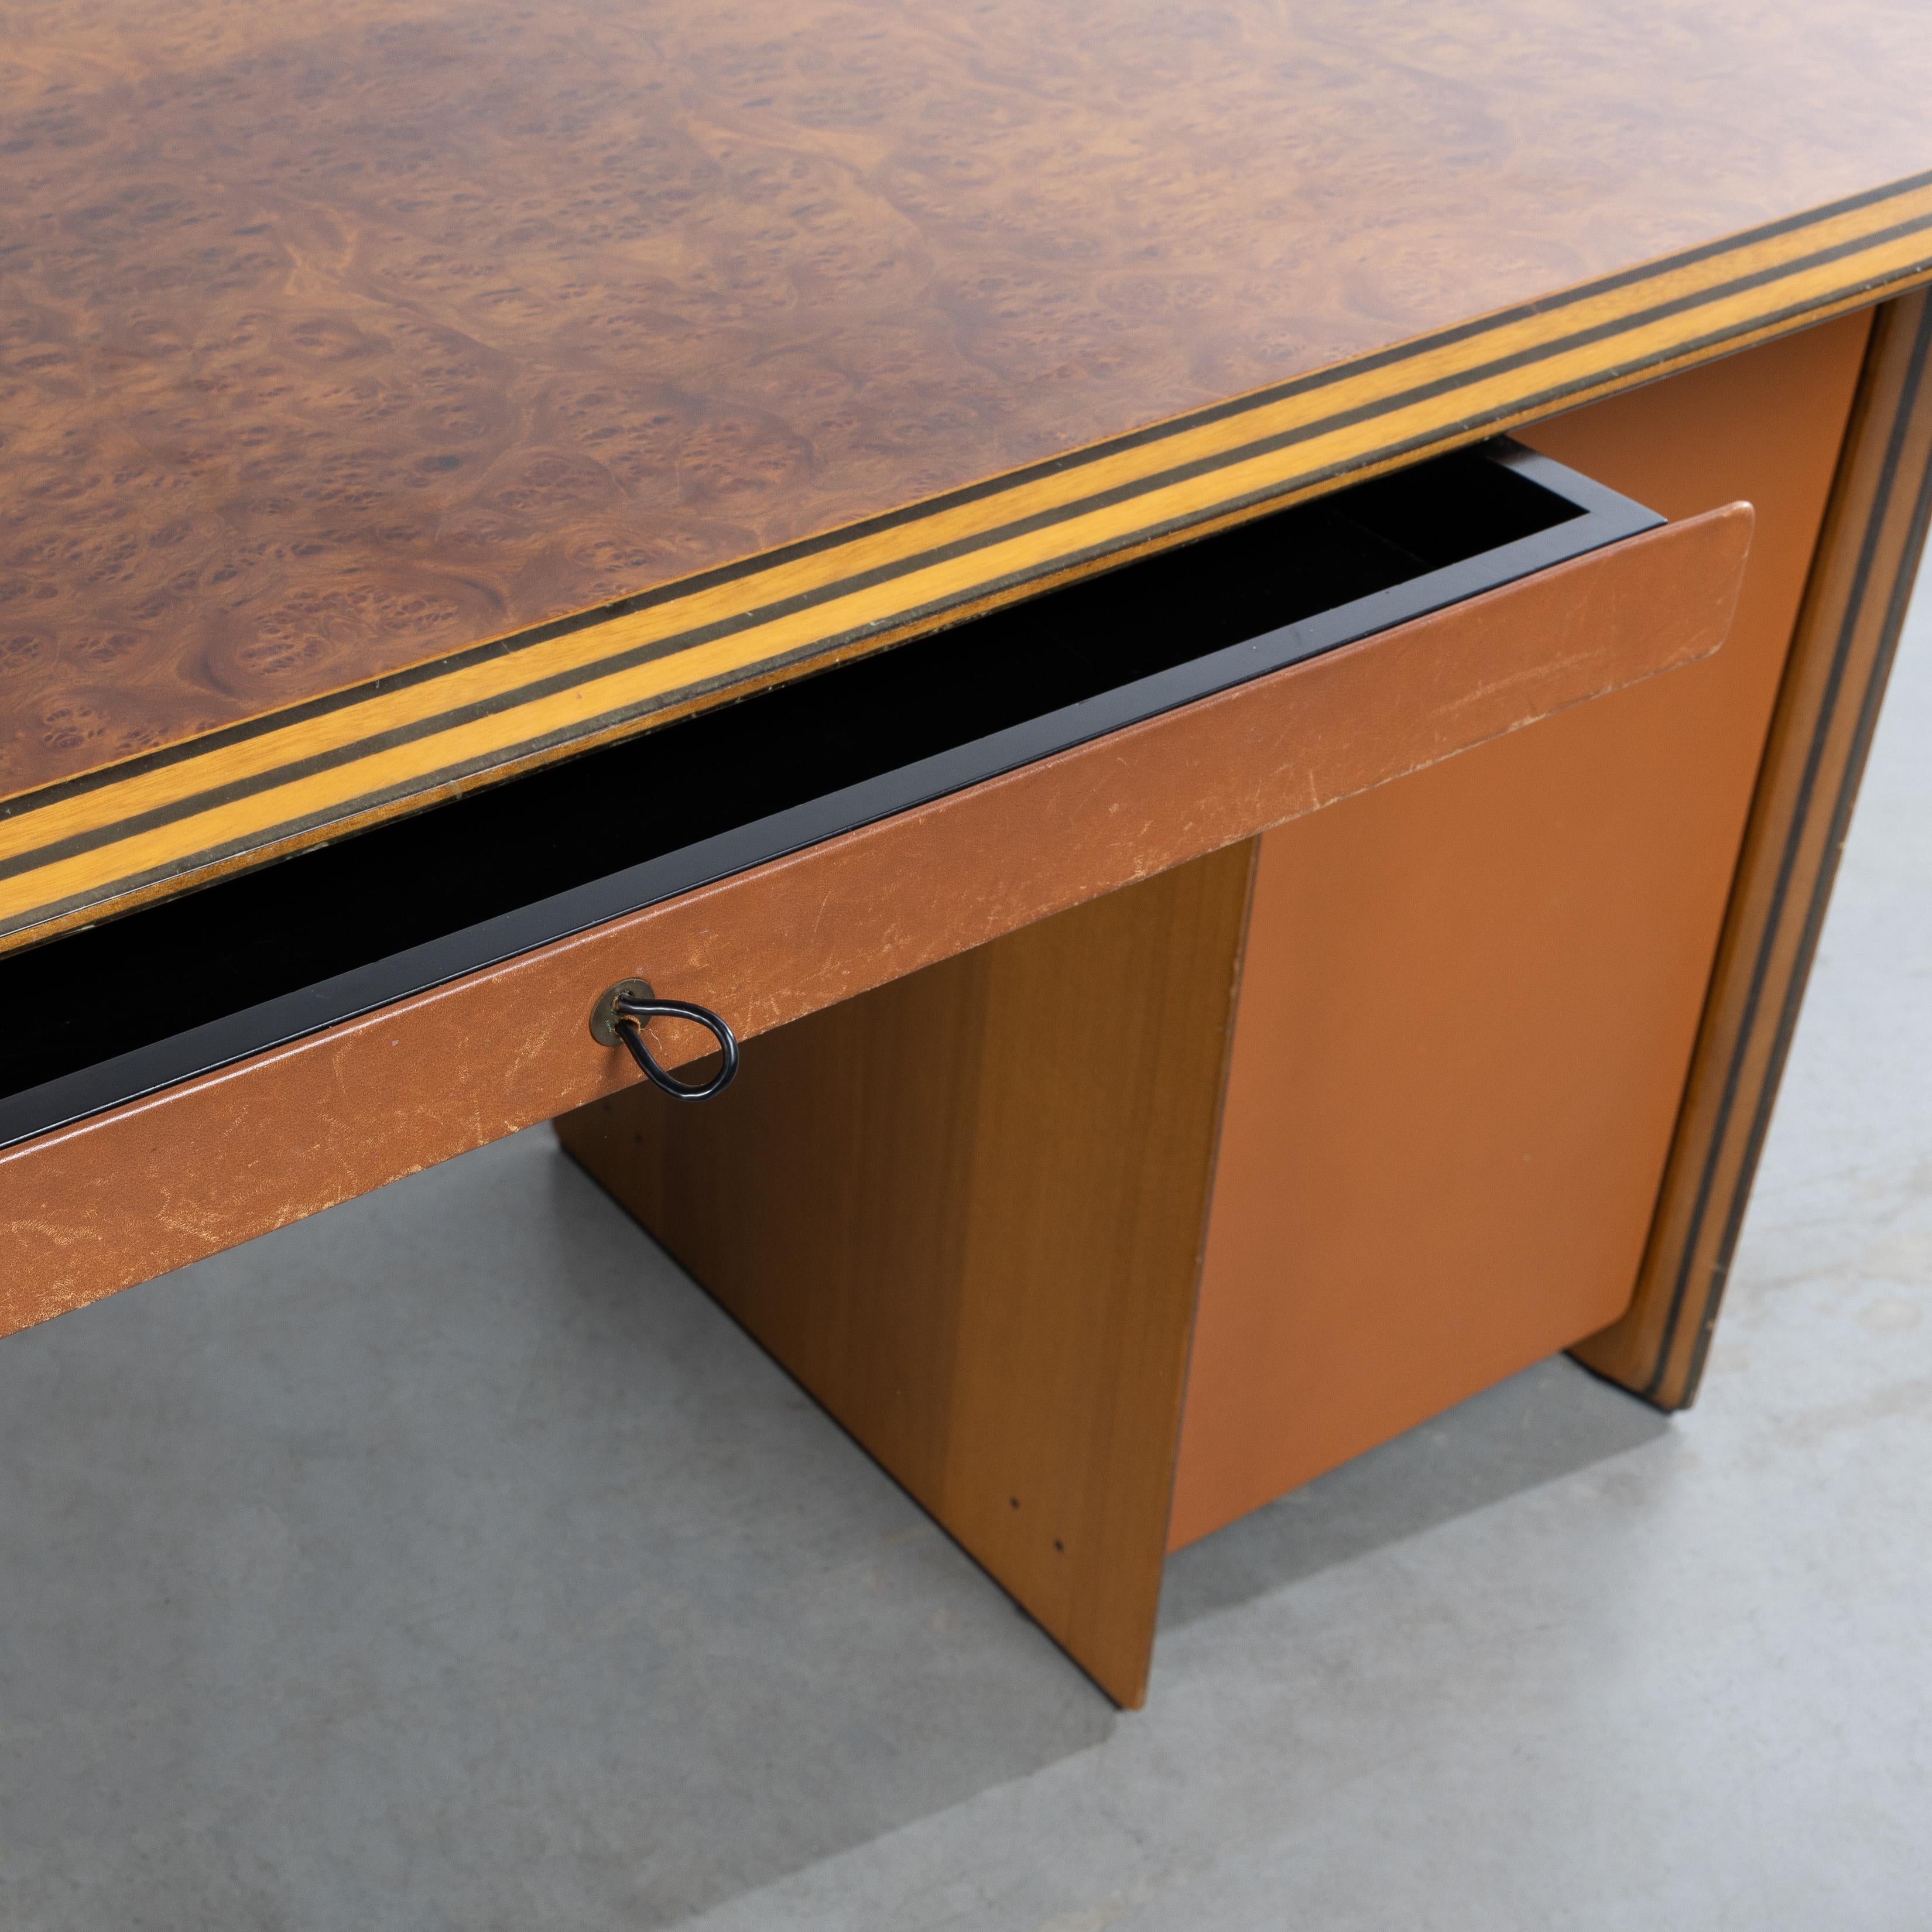 Artona by Afra & Tobia Scarpa – Walnut veneer laminate desk and chair For Sale 5